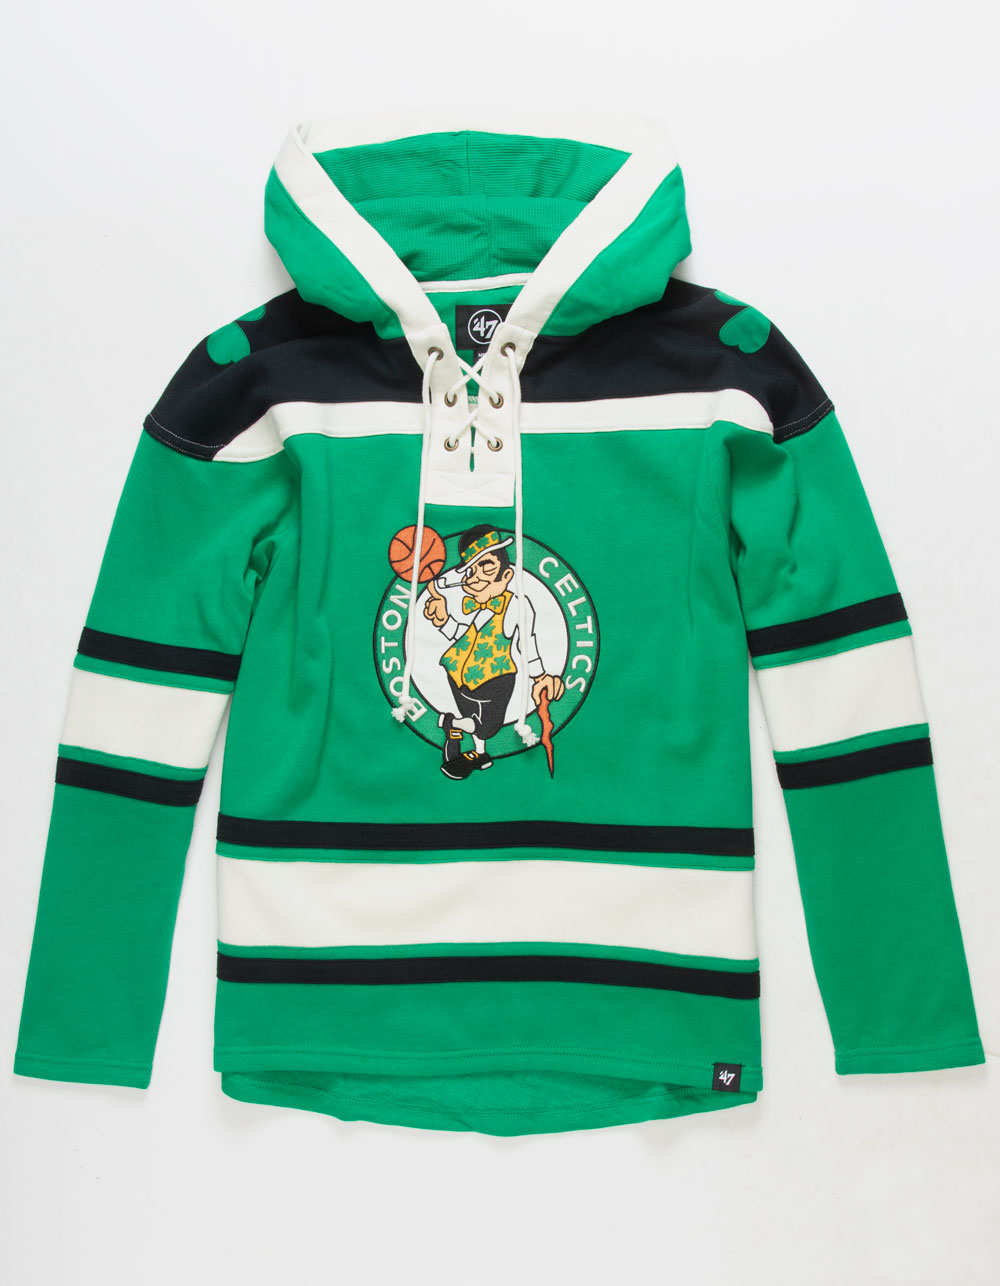 47 Brand Boston Celtics sweatshirt Size XL - $13 - From Brea